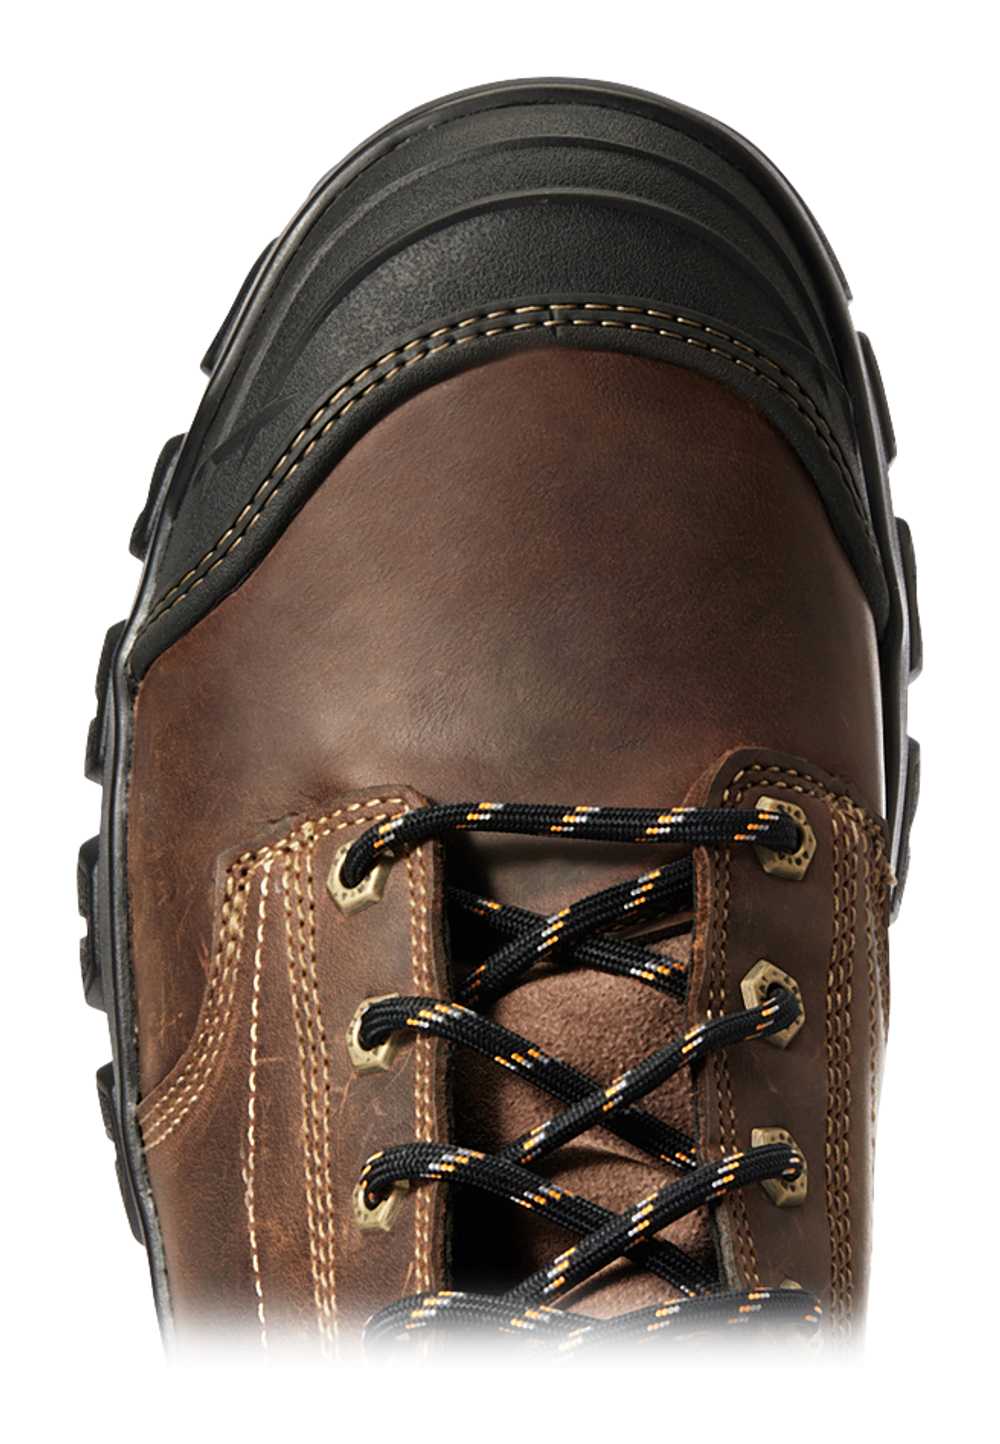 Ariat Treadfast Work Boots for Men - Brown - 8.5M - image 2